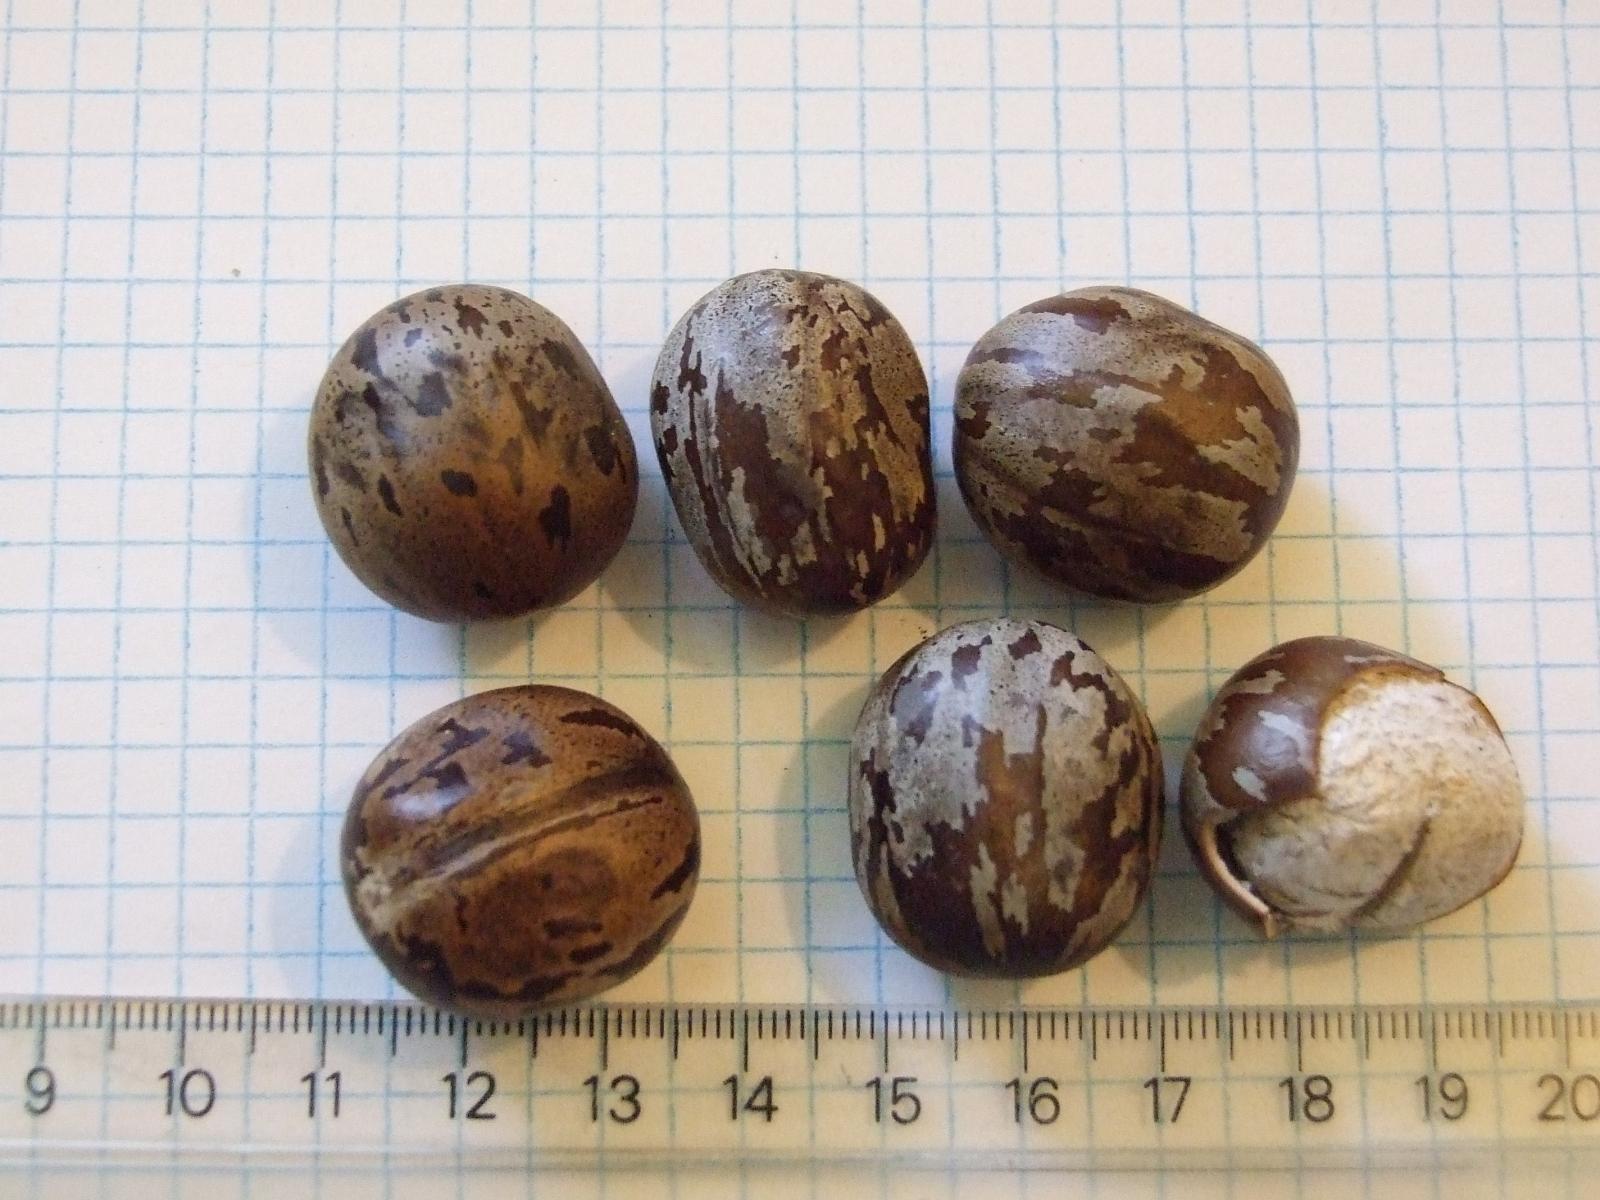 Hevea brasiliensis-Para rubber tree-Sharinga tree-Milky Latex 15 Seeds CEYLON 